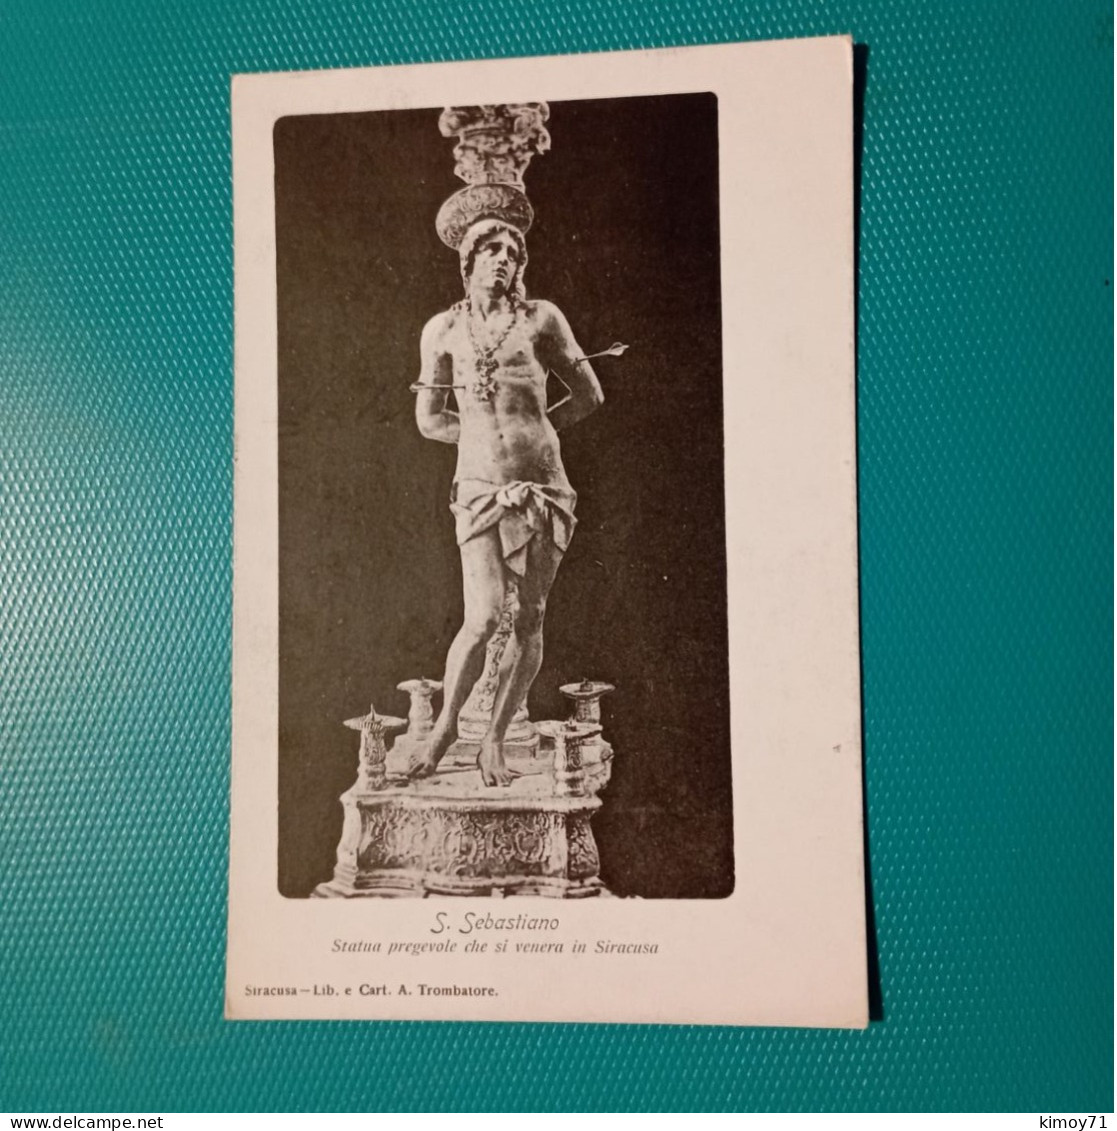 Cartolina S. Sebastiano - Statua Pregevole Che Si Venera In Siracusa. - Siracusa